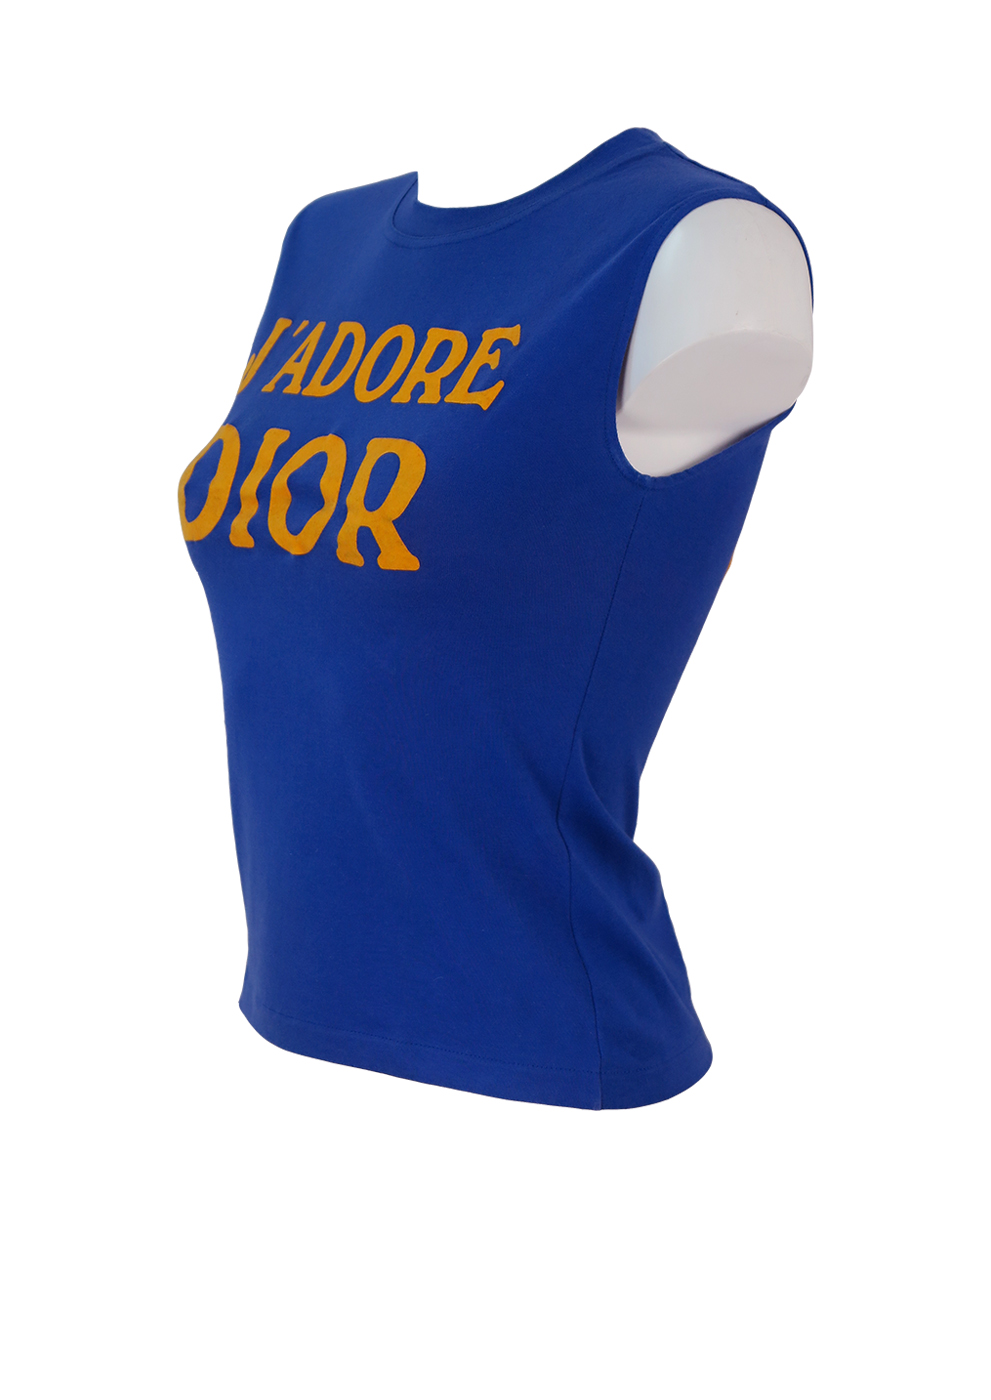 Amazoncom Jadore Dior Shirt